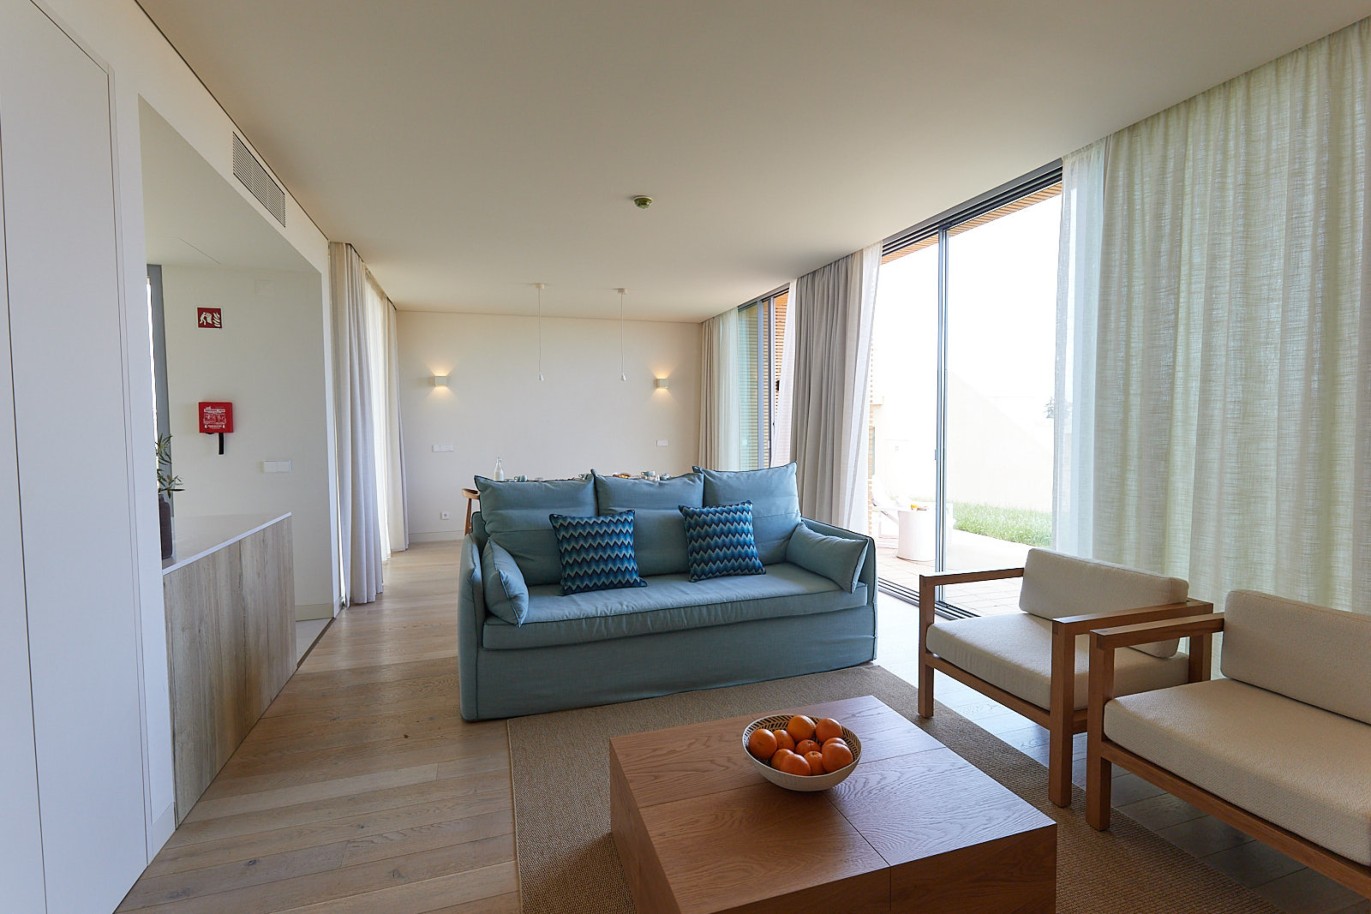 2 bedroom apartment in resort, for sale in Porches, Algarve_229121